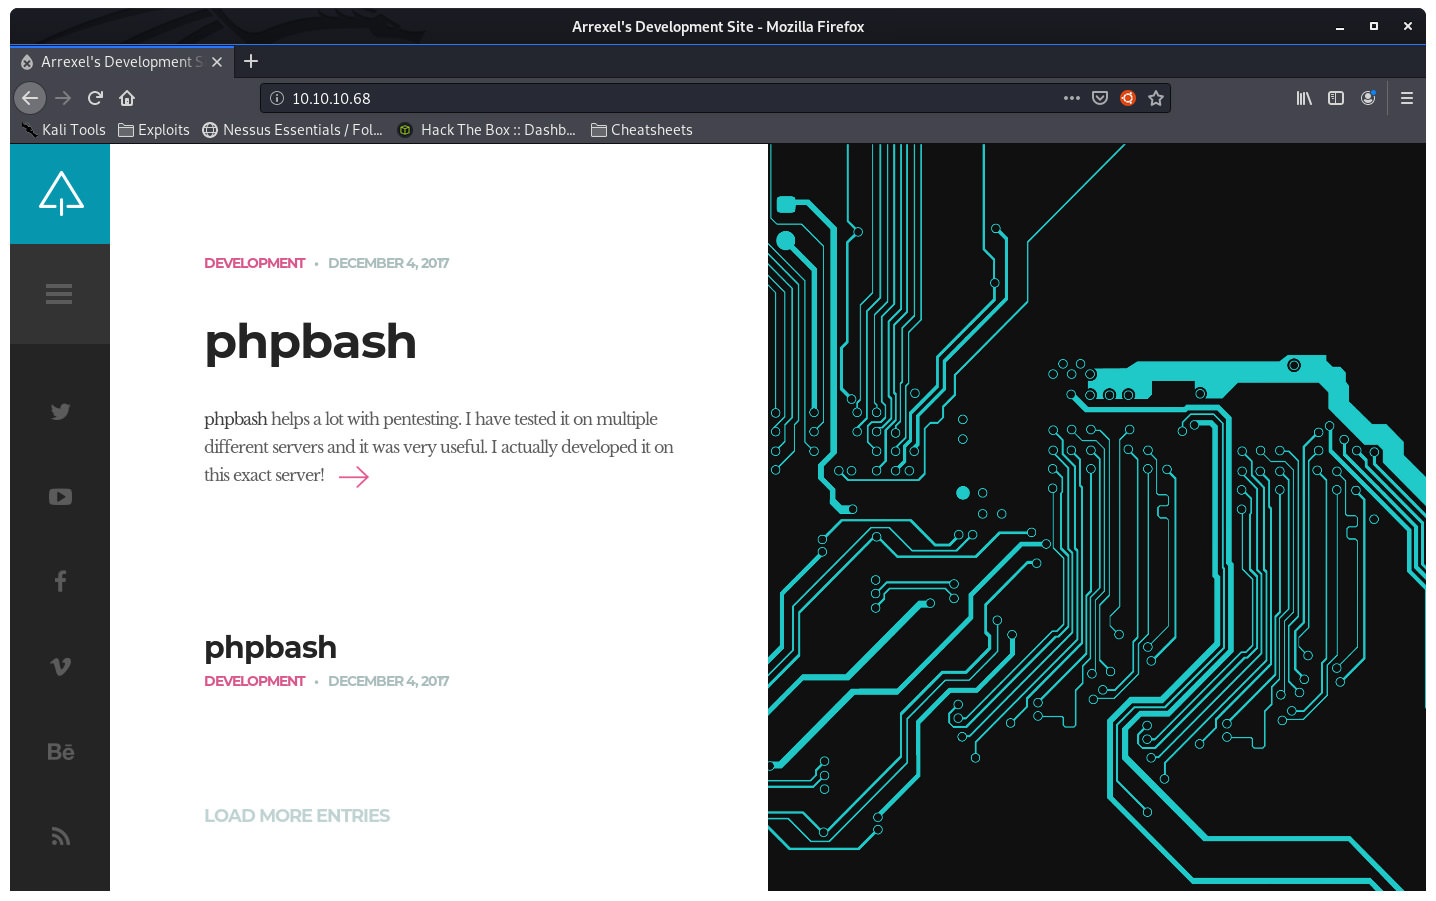 hackthebox bashed phpbash homepage